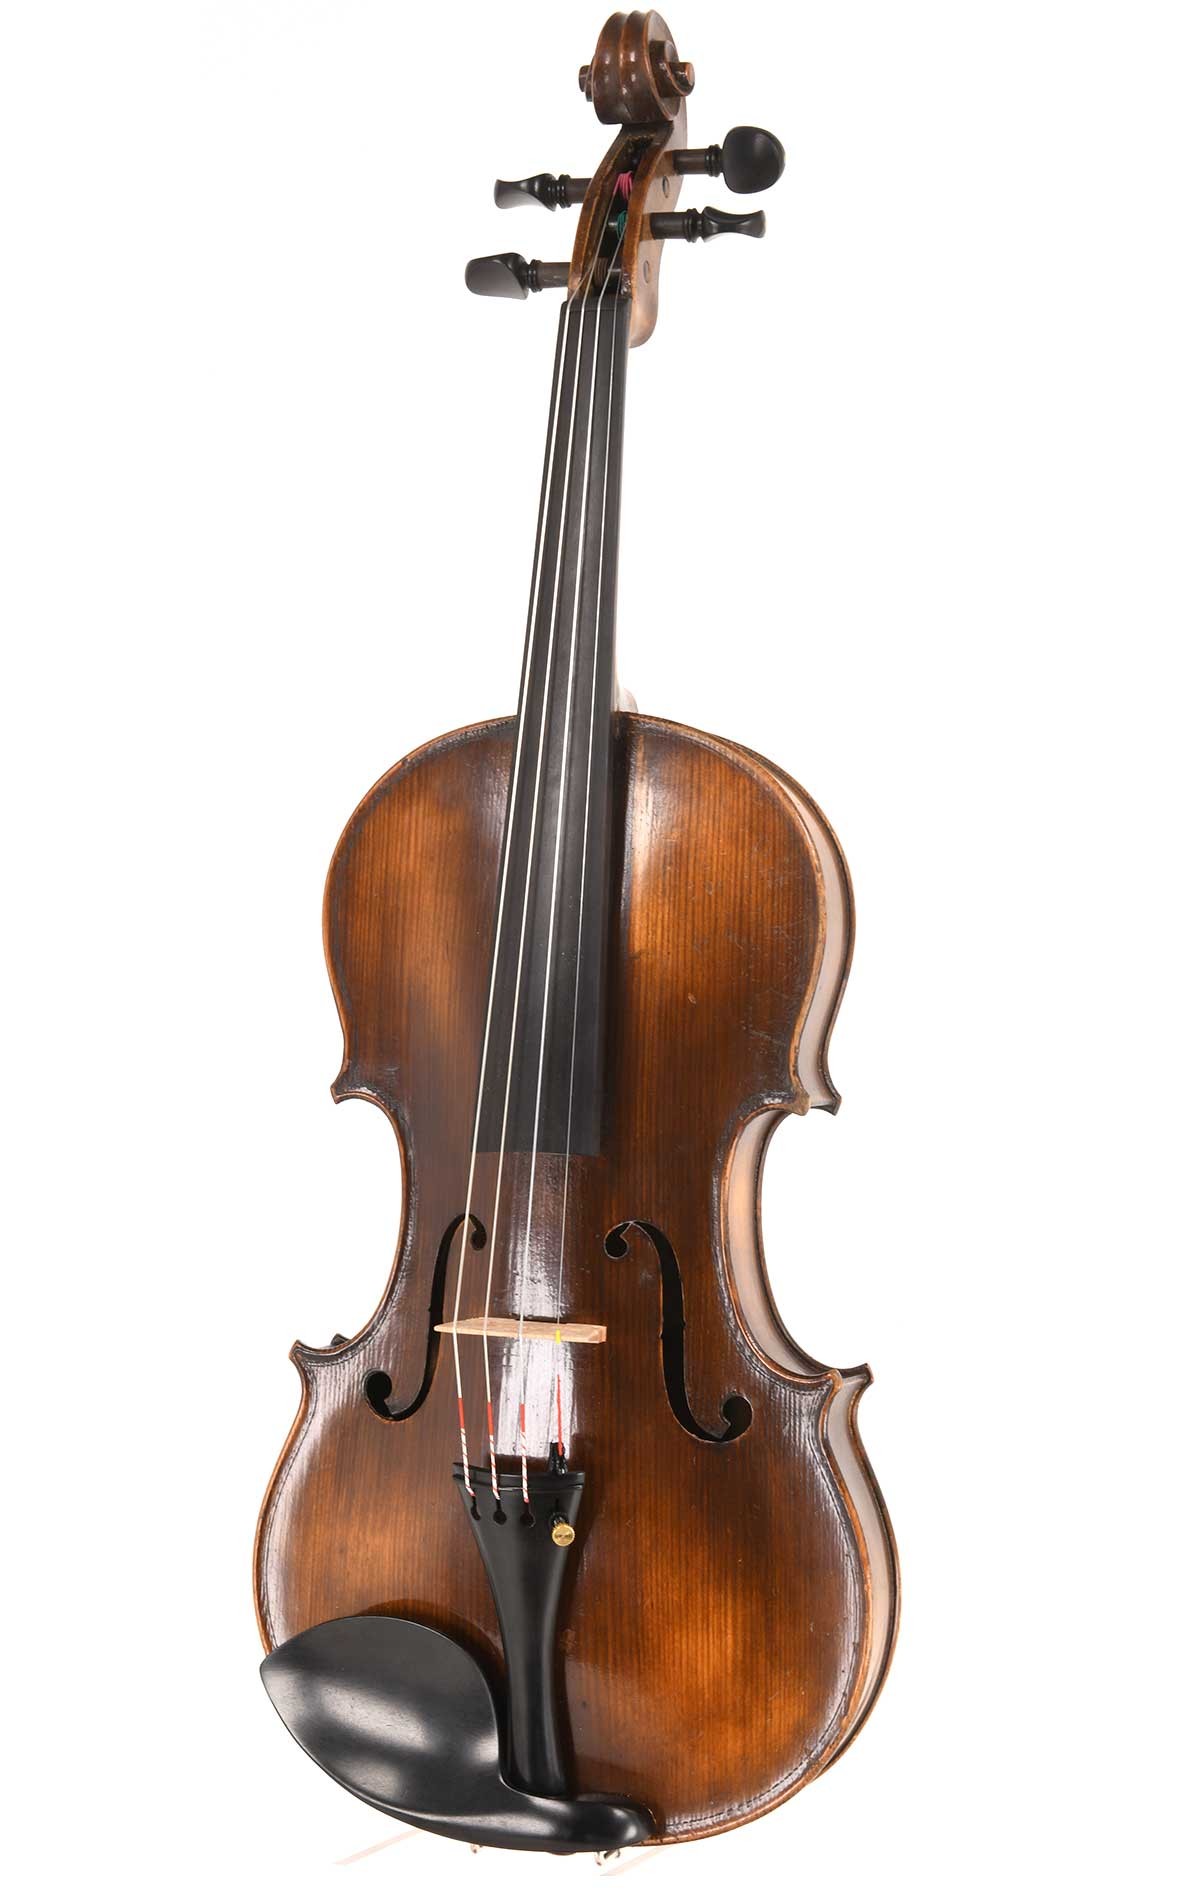 Vieux violon français vers 1910, d'après Antonio Stradivari